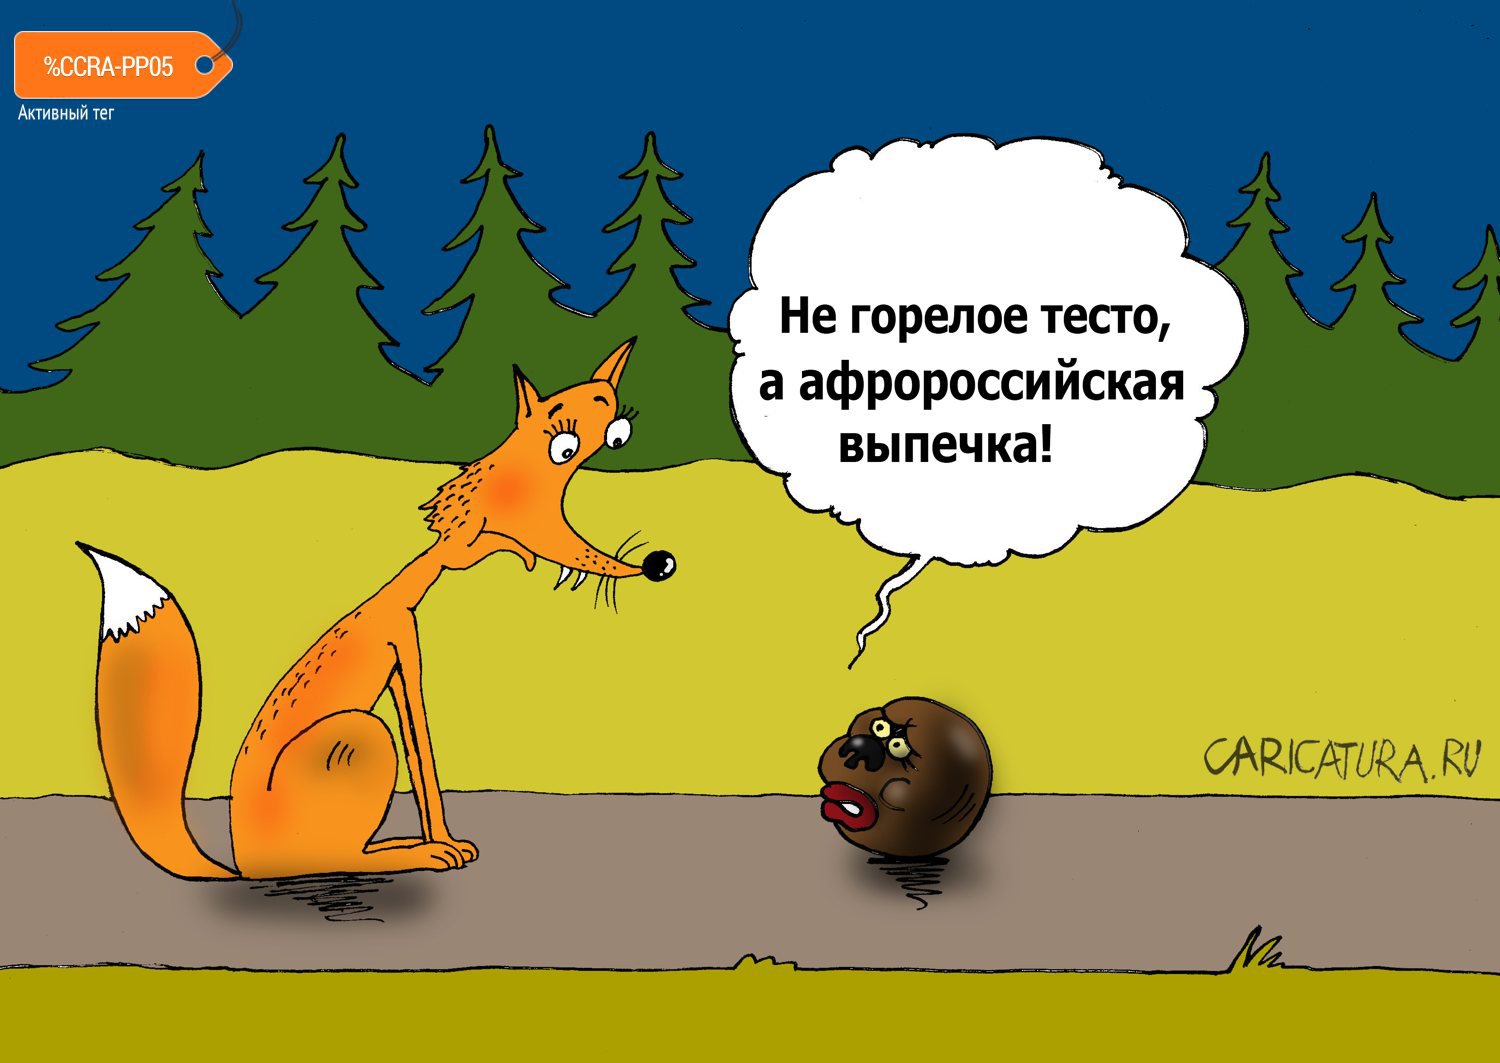 Карикатура "Сказка - ложь!", Валерий Тарасенко